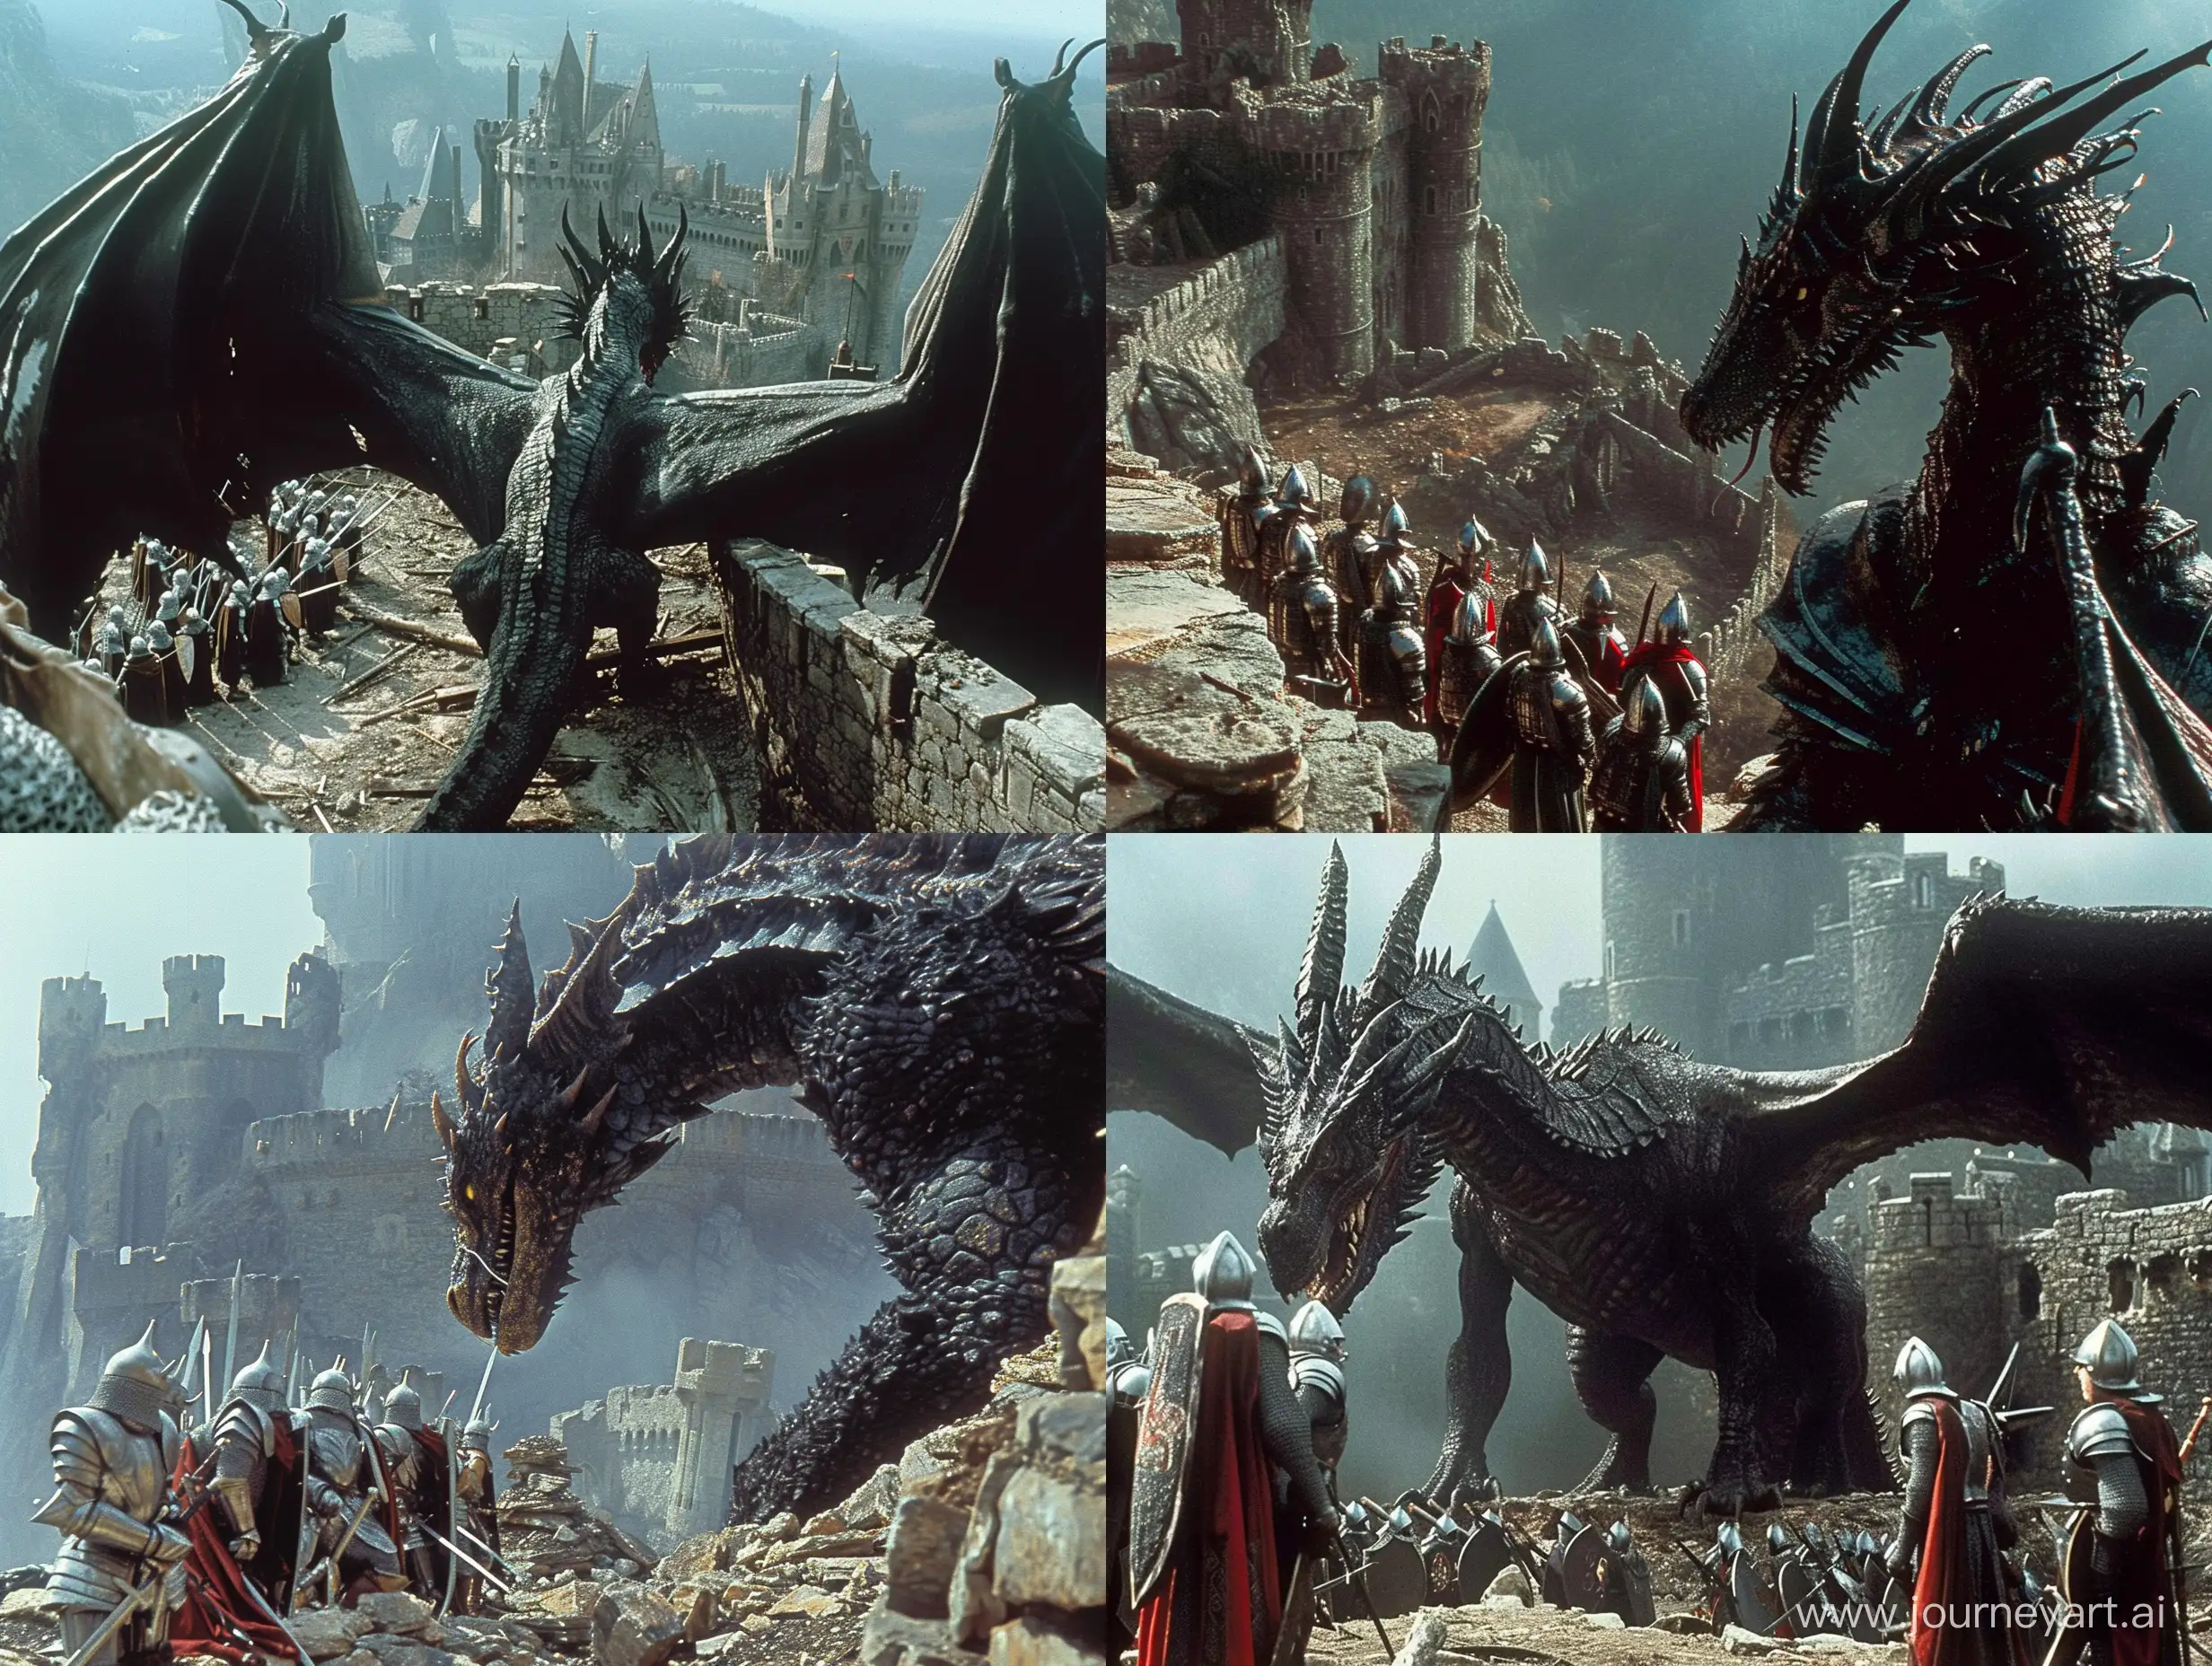 Gigantic-Acidic-Black-Dragon-Menaces-Knights-Atop-a-Ruined-Castle-Keep-Dark-Fantasy-1980s-Style